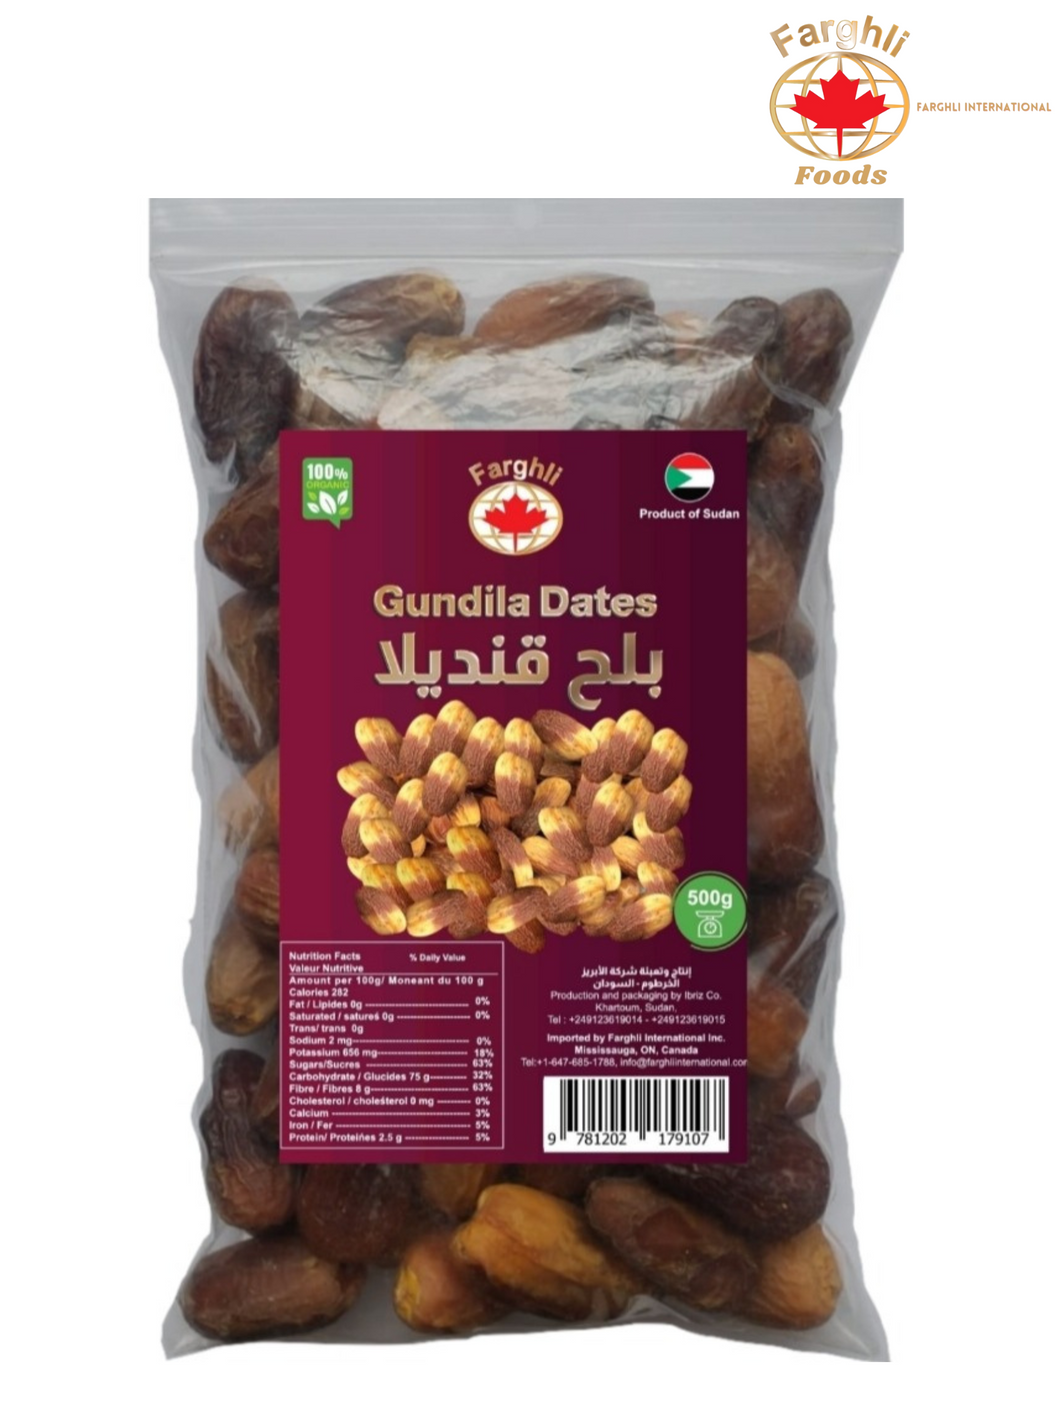 Gundilaa dates sold in bag - 500 g